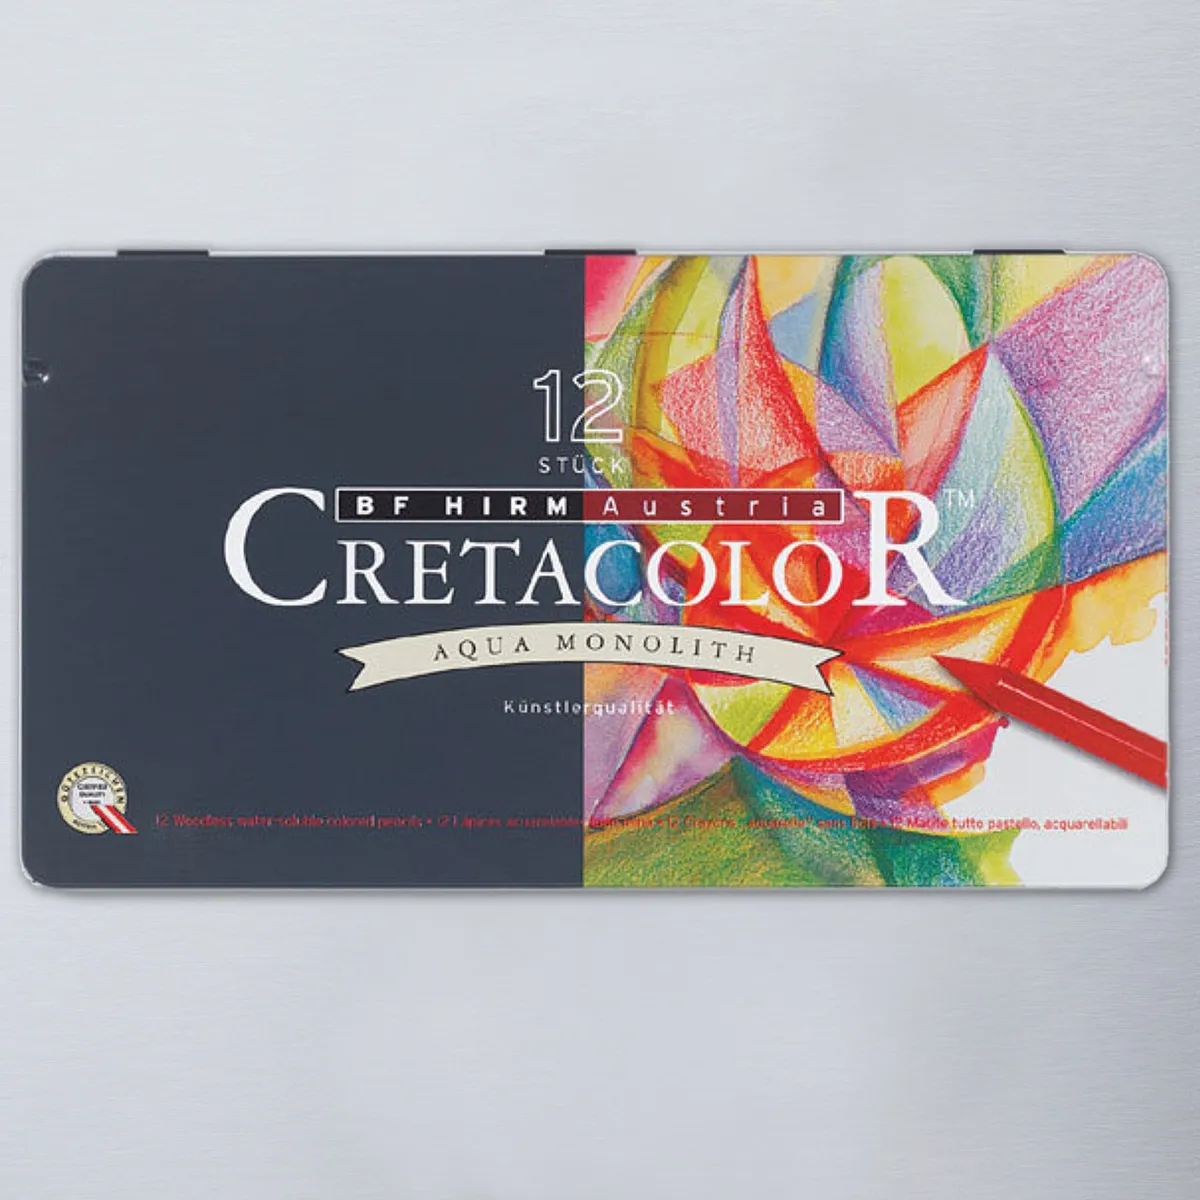 Best watercolor pencils – Cretacolor Aqua Monolith